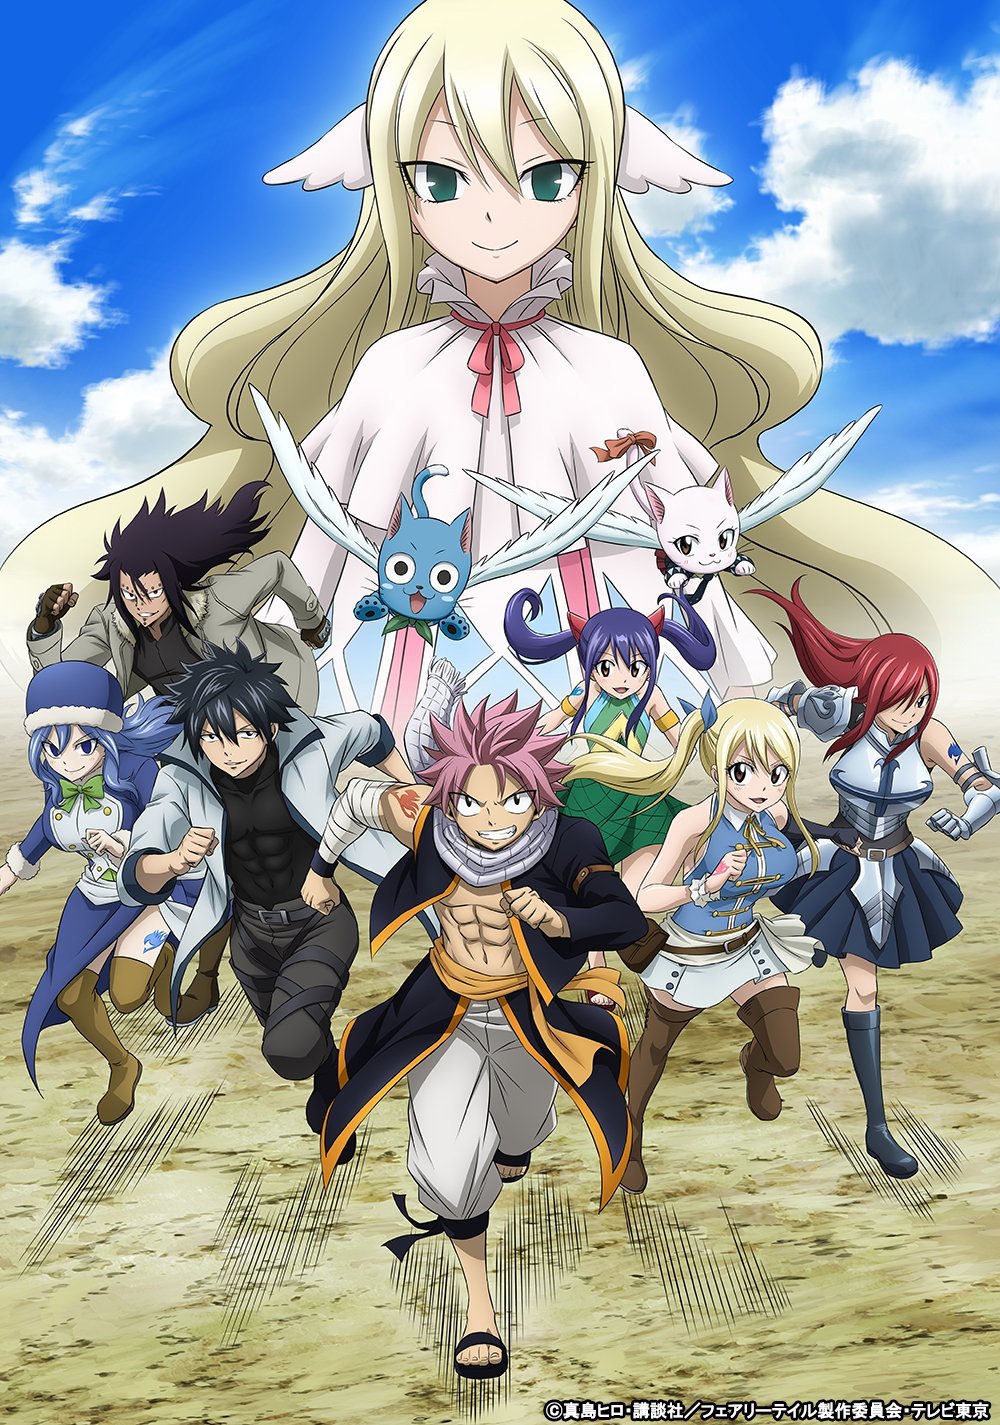 A new key visual for the Ã¢ÂÂFairy TailÃ¢ÂÂ final anime series is now being displayed on its official website. Broadcast begins October 7th.